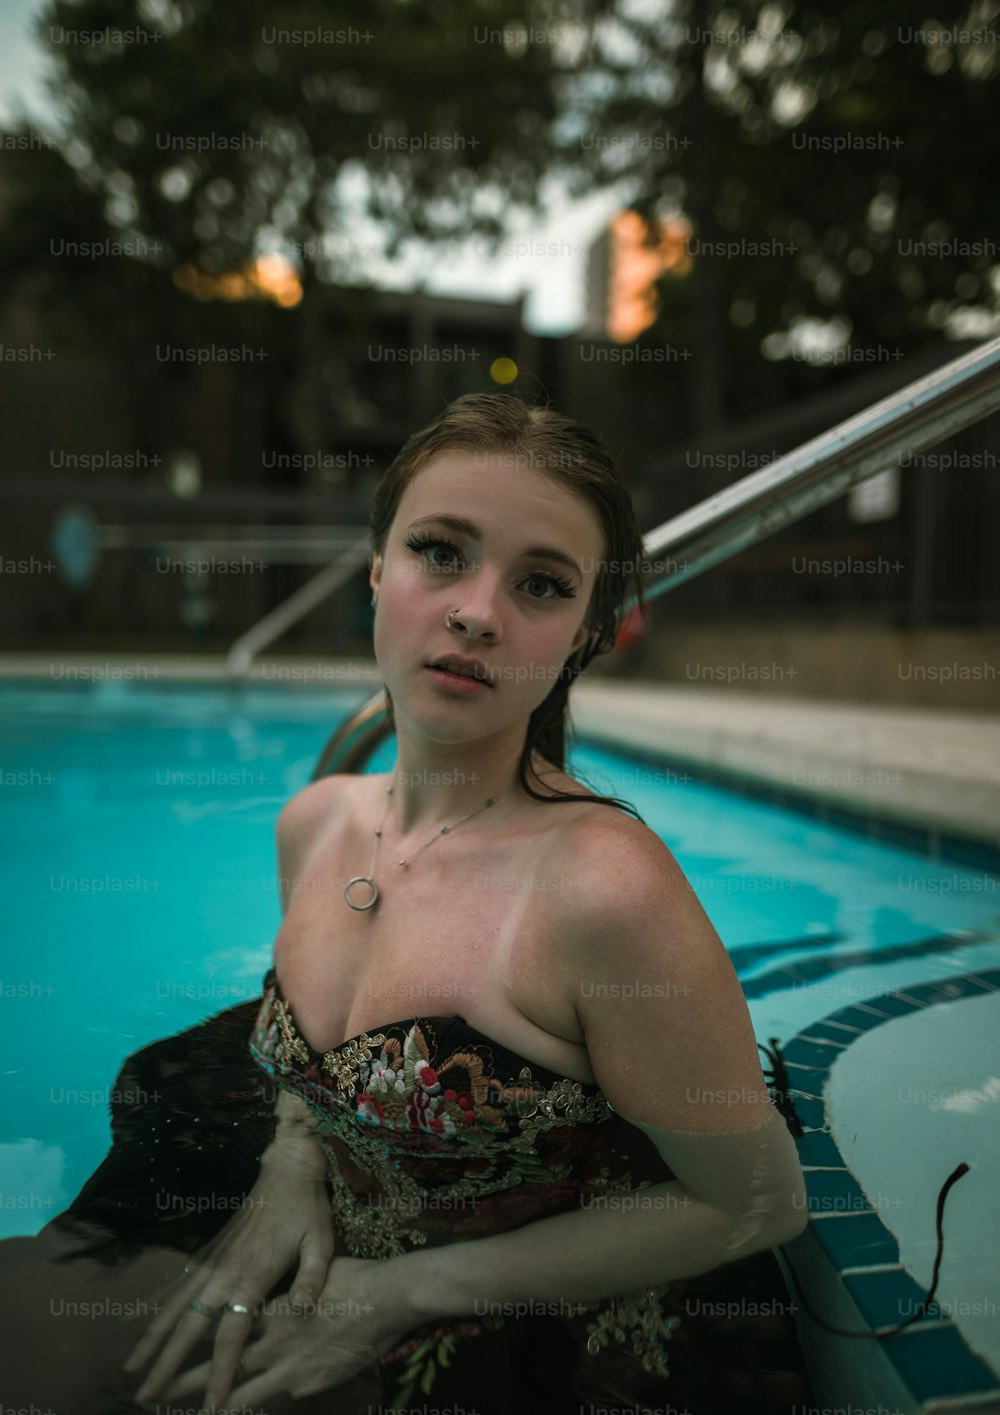 Une femme en robe assise dans une piscine